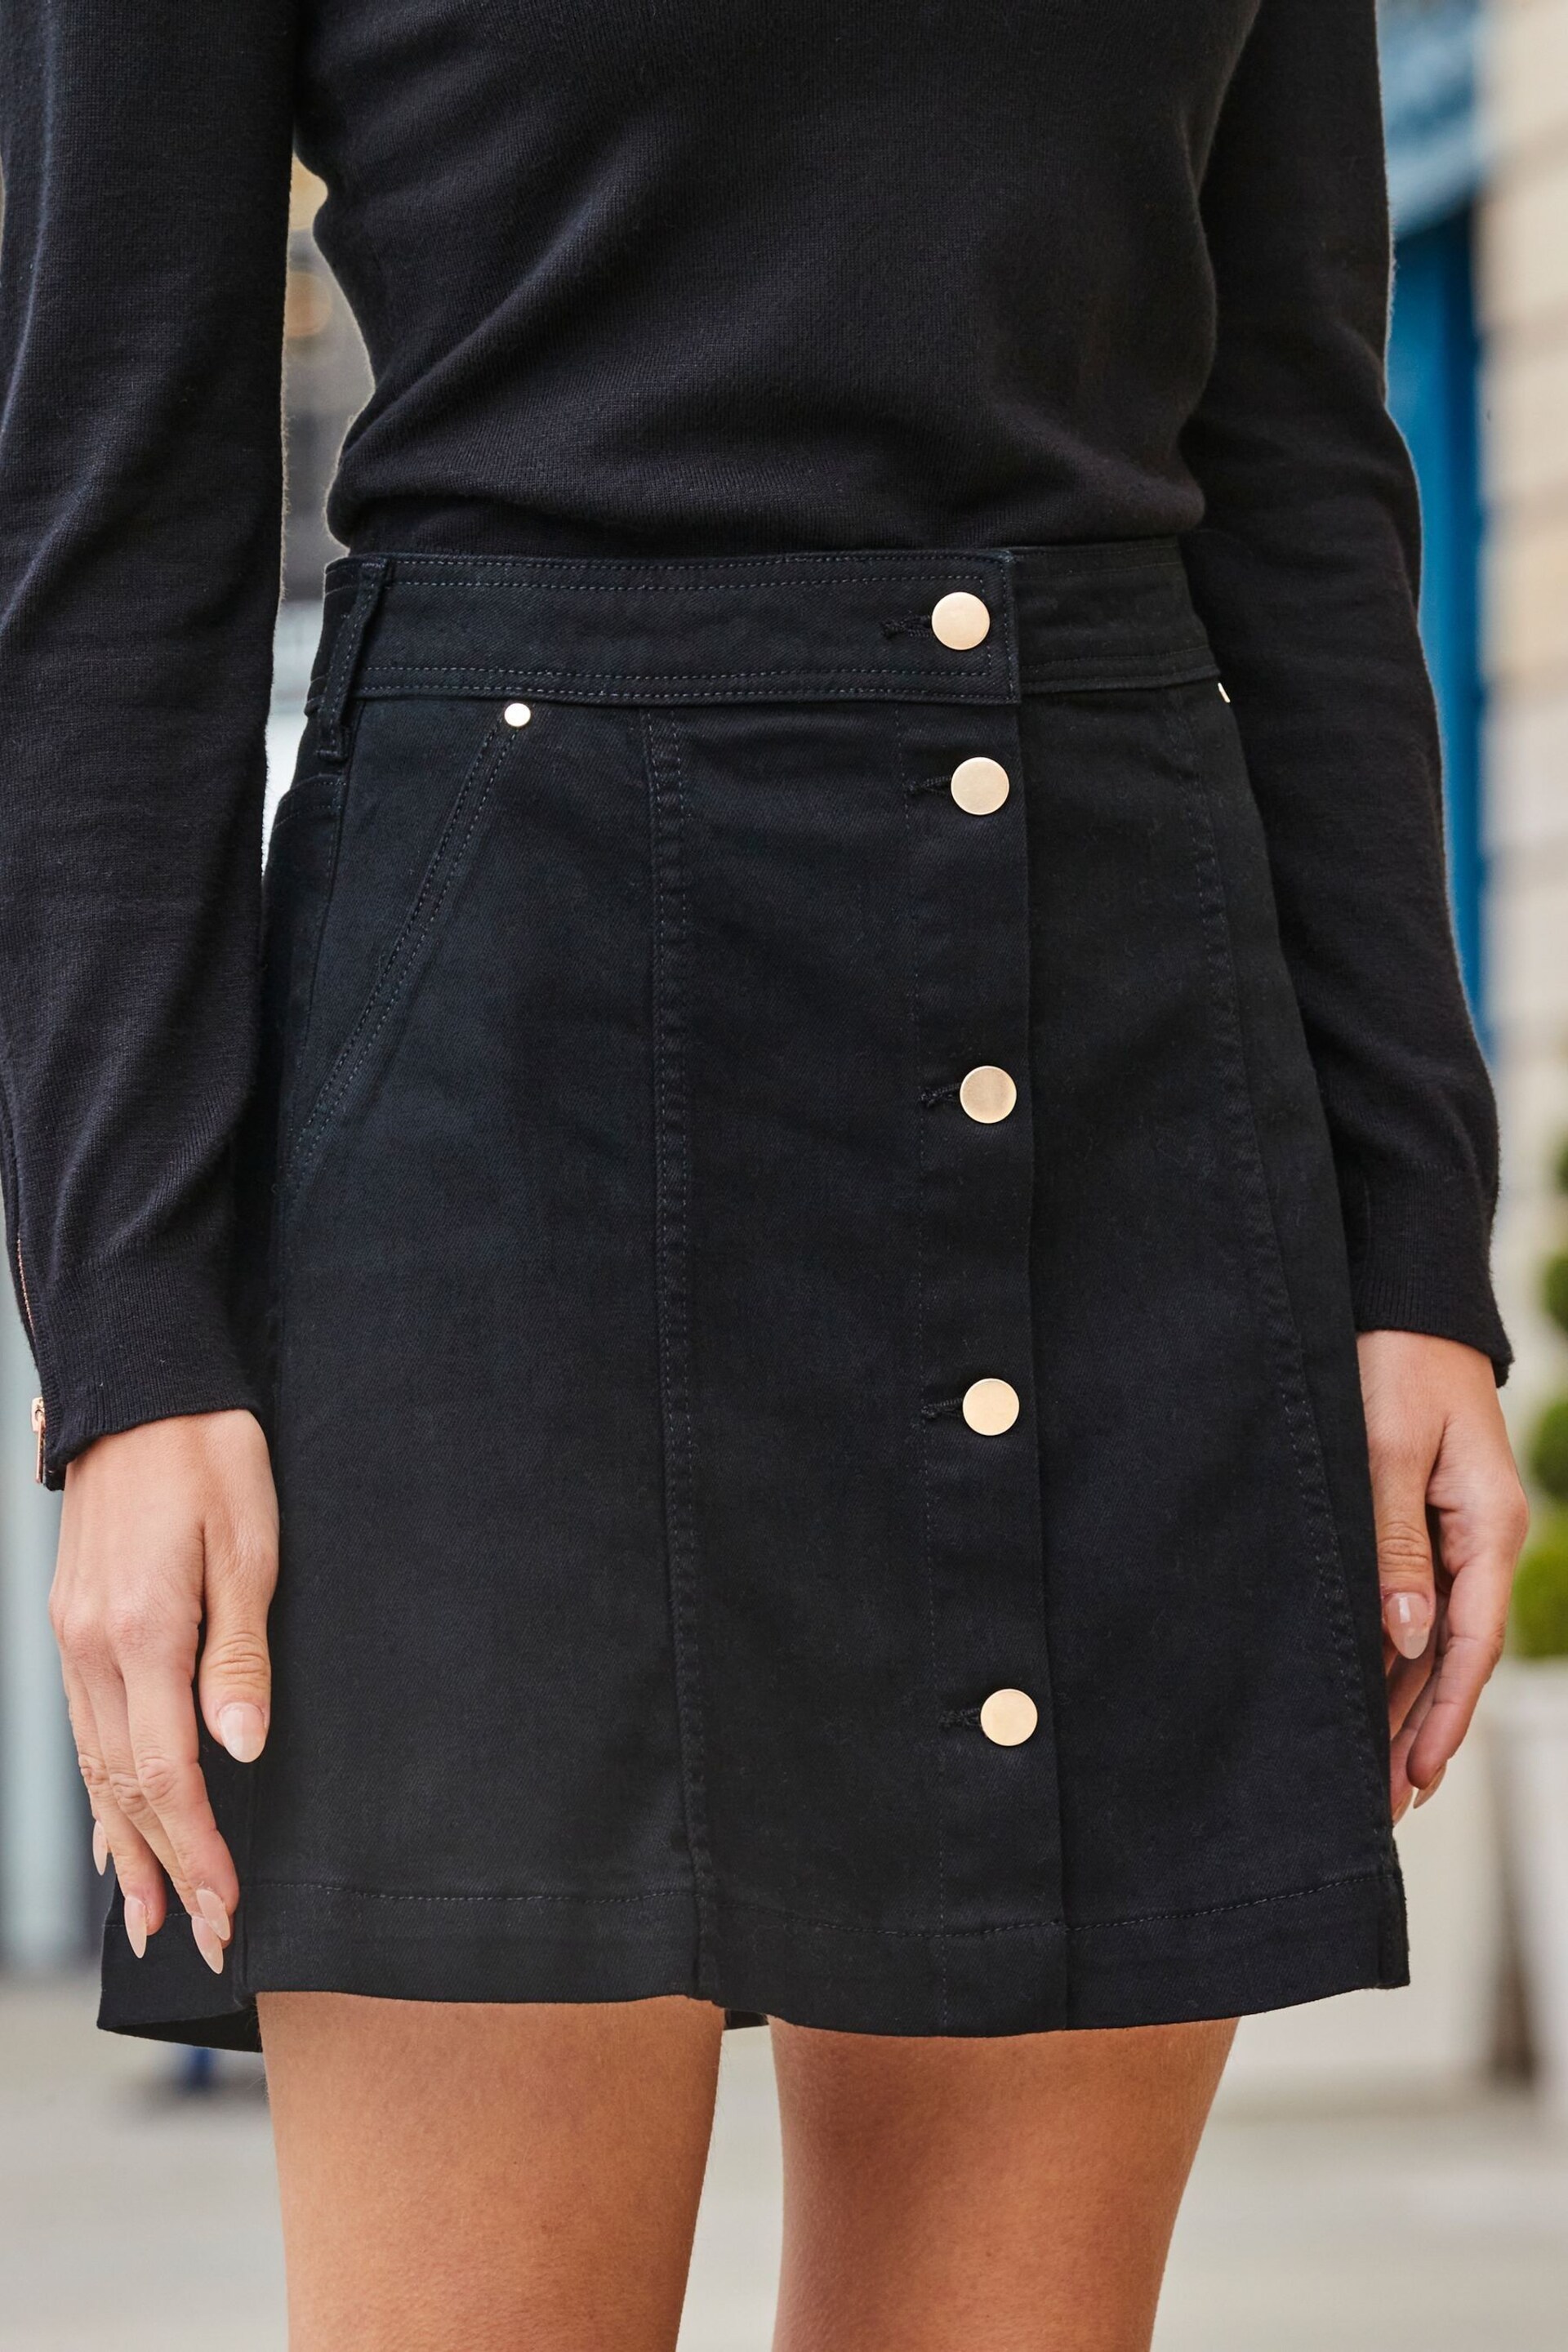 Sosandar Black Button Front A-Line Denim Skirt - Image 6 of 6